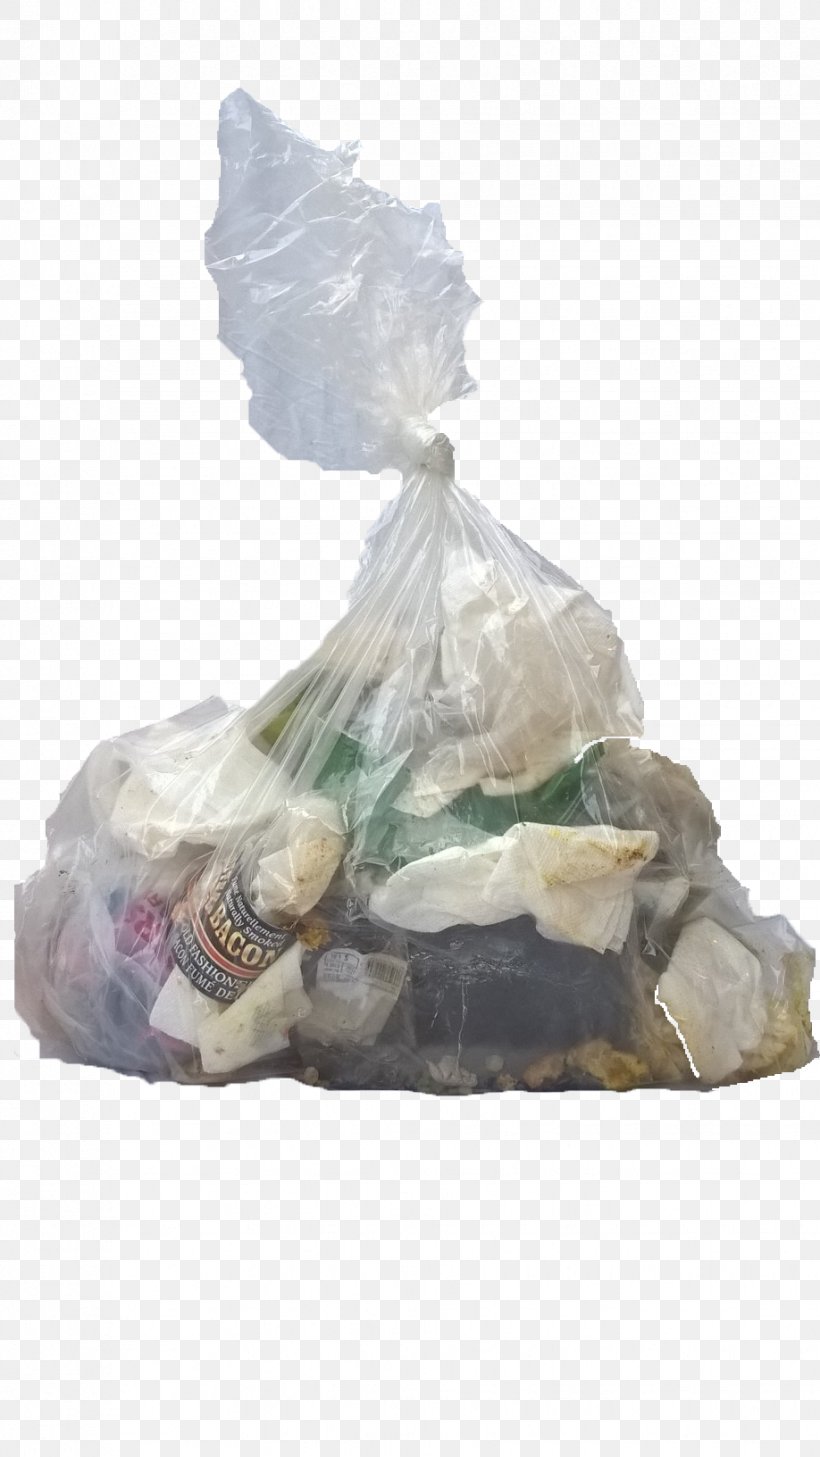 Douro-Dummer Bin Bag Plastic Bag Waste, PNG, 918x1632px, Dourodummer, Bag, Bin Bag, Food Waste, Kerbside Collection Download Free